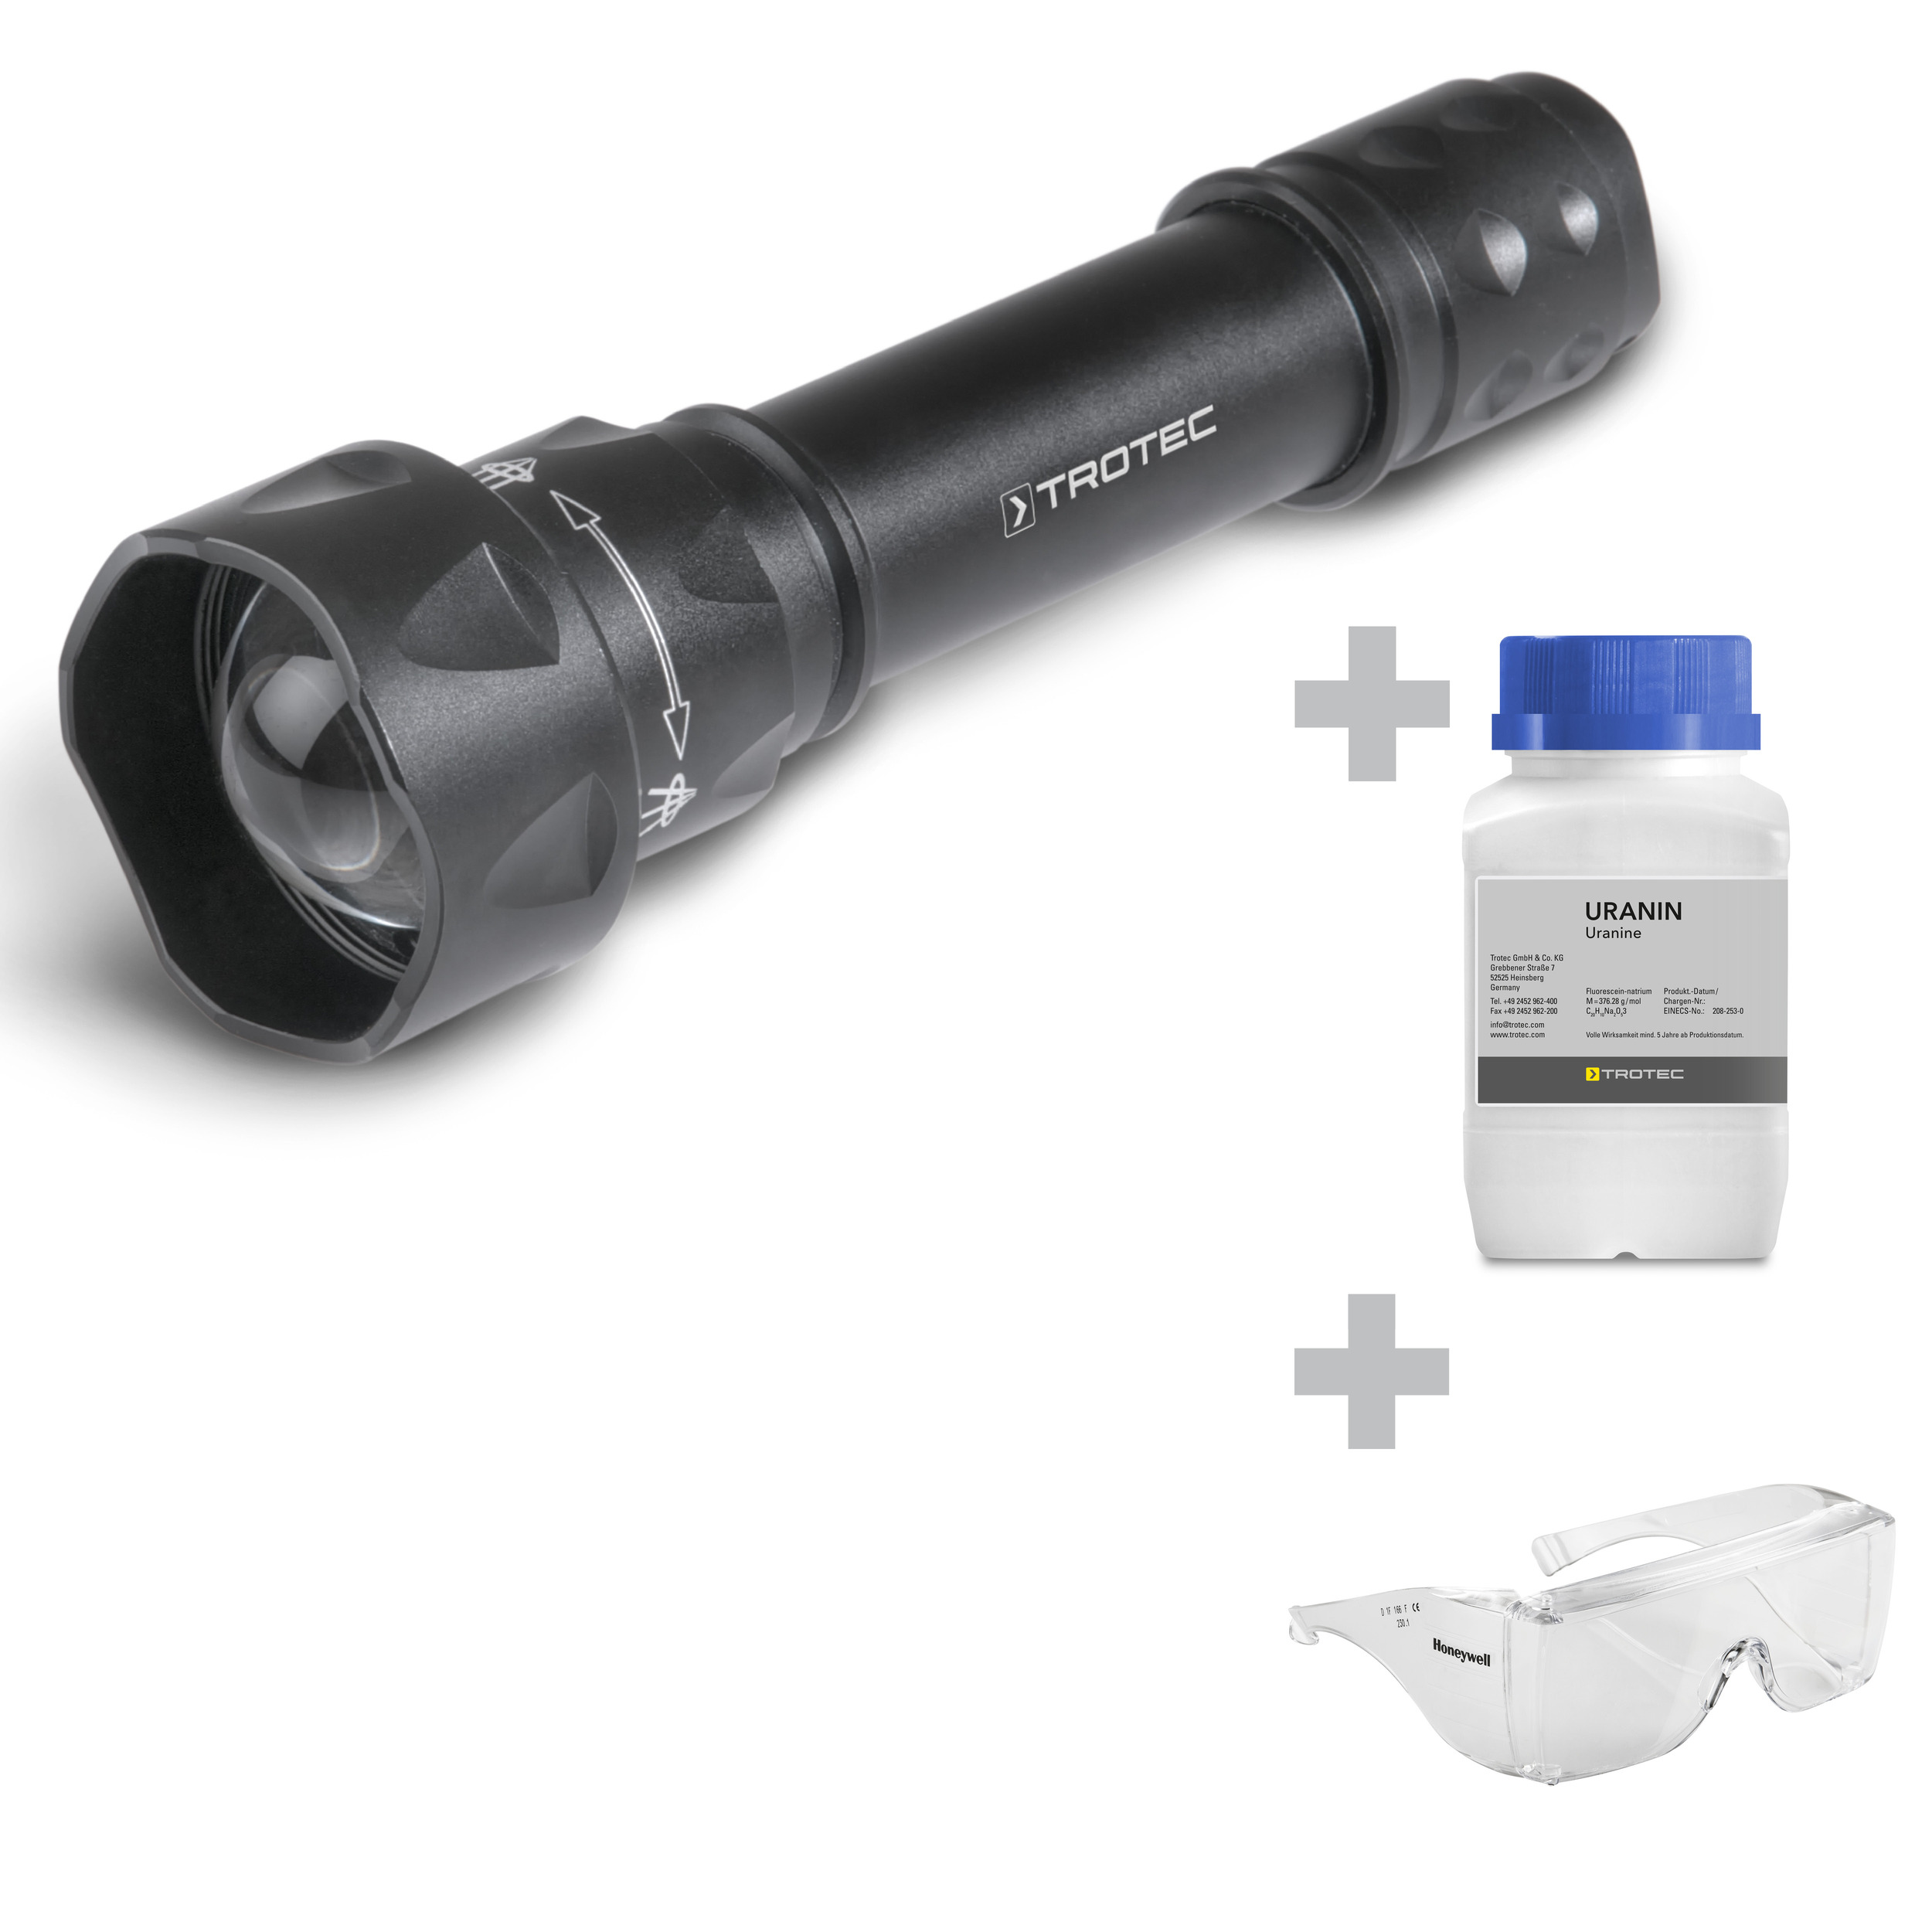 Trotec UV-Torchlight 15F + Uranin + UV-Schutzbrille KIT0003015